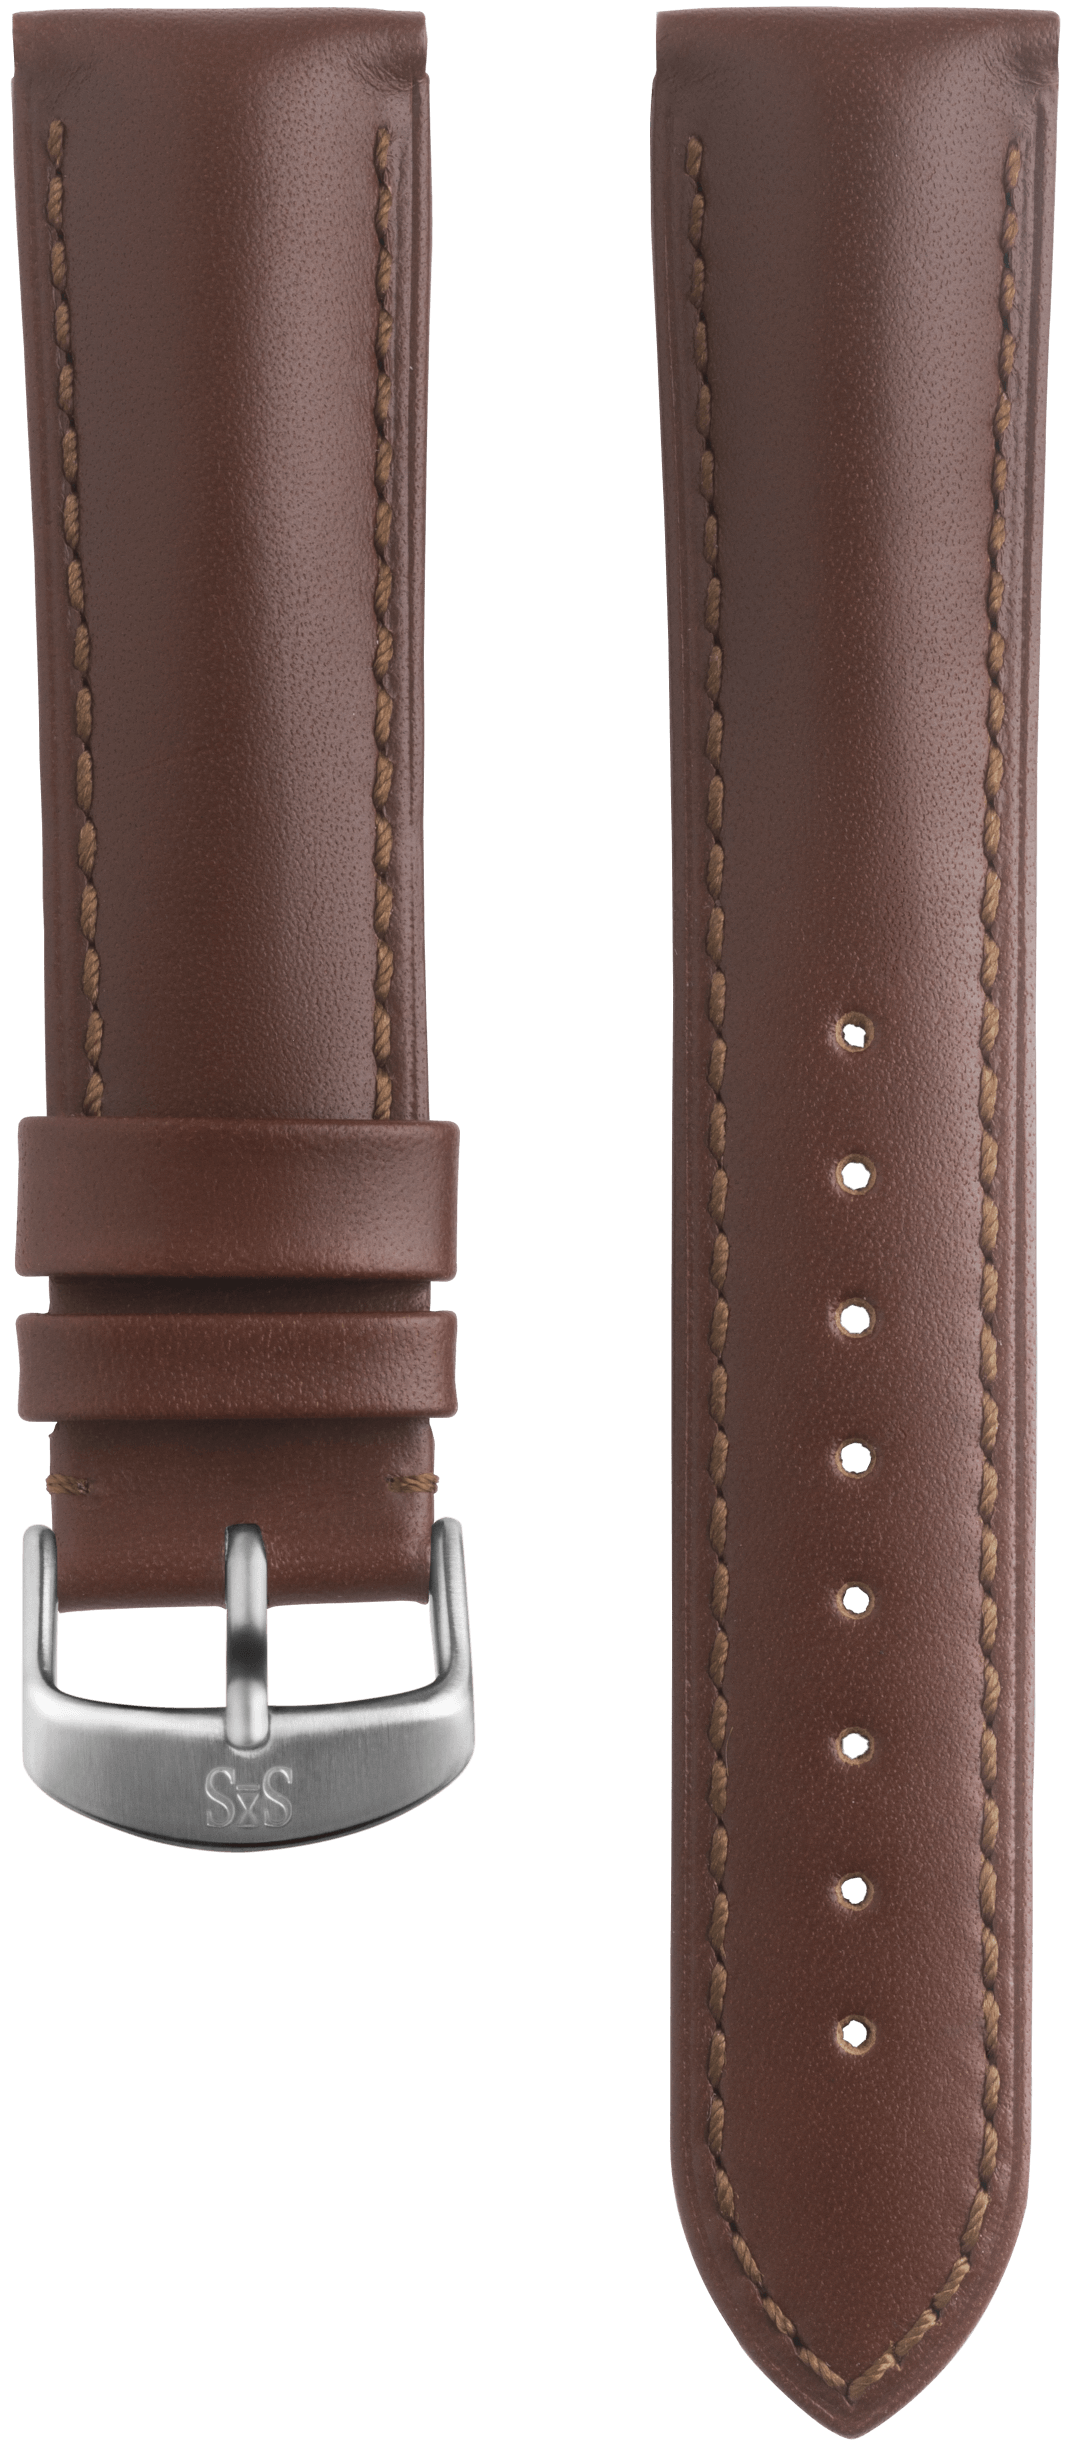 20mm Brown calfskin leather strap